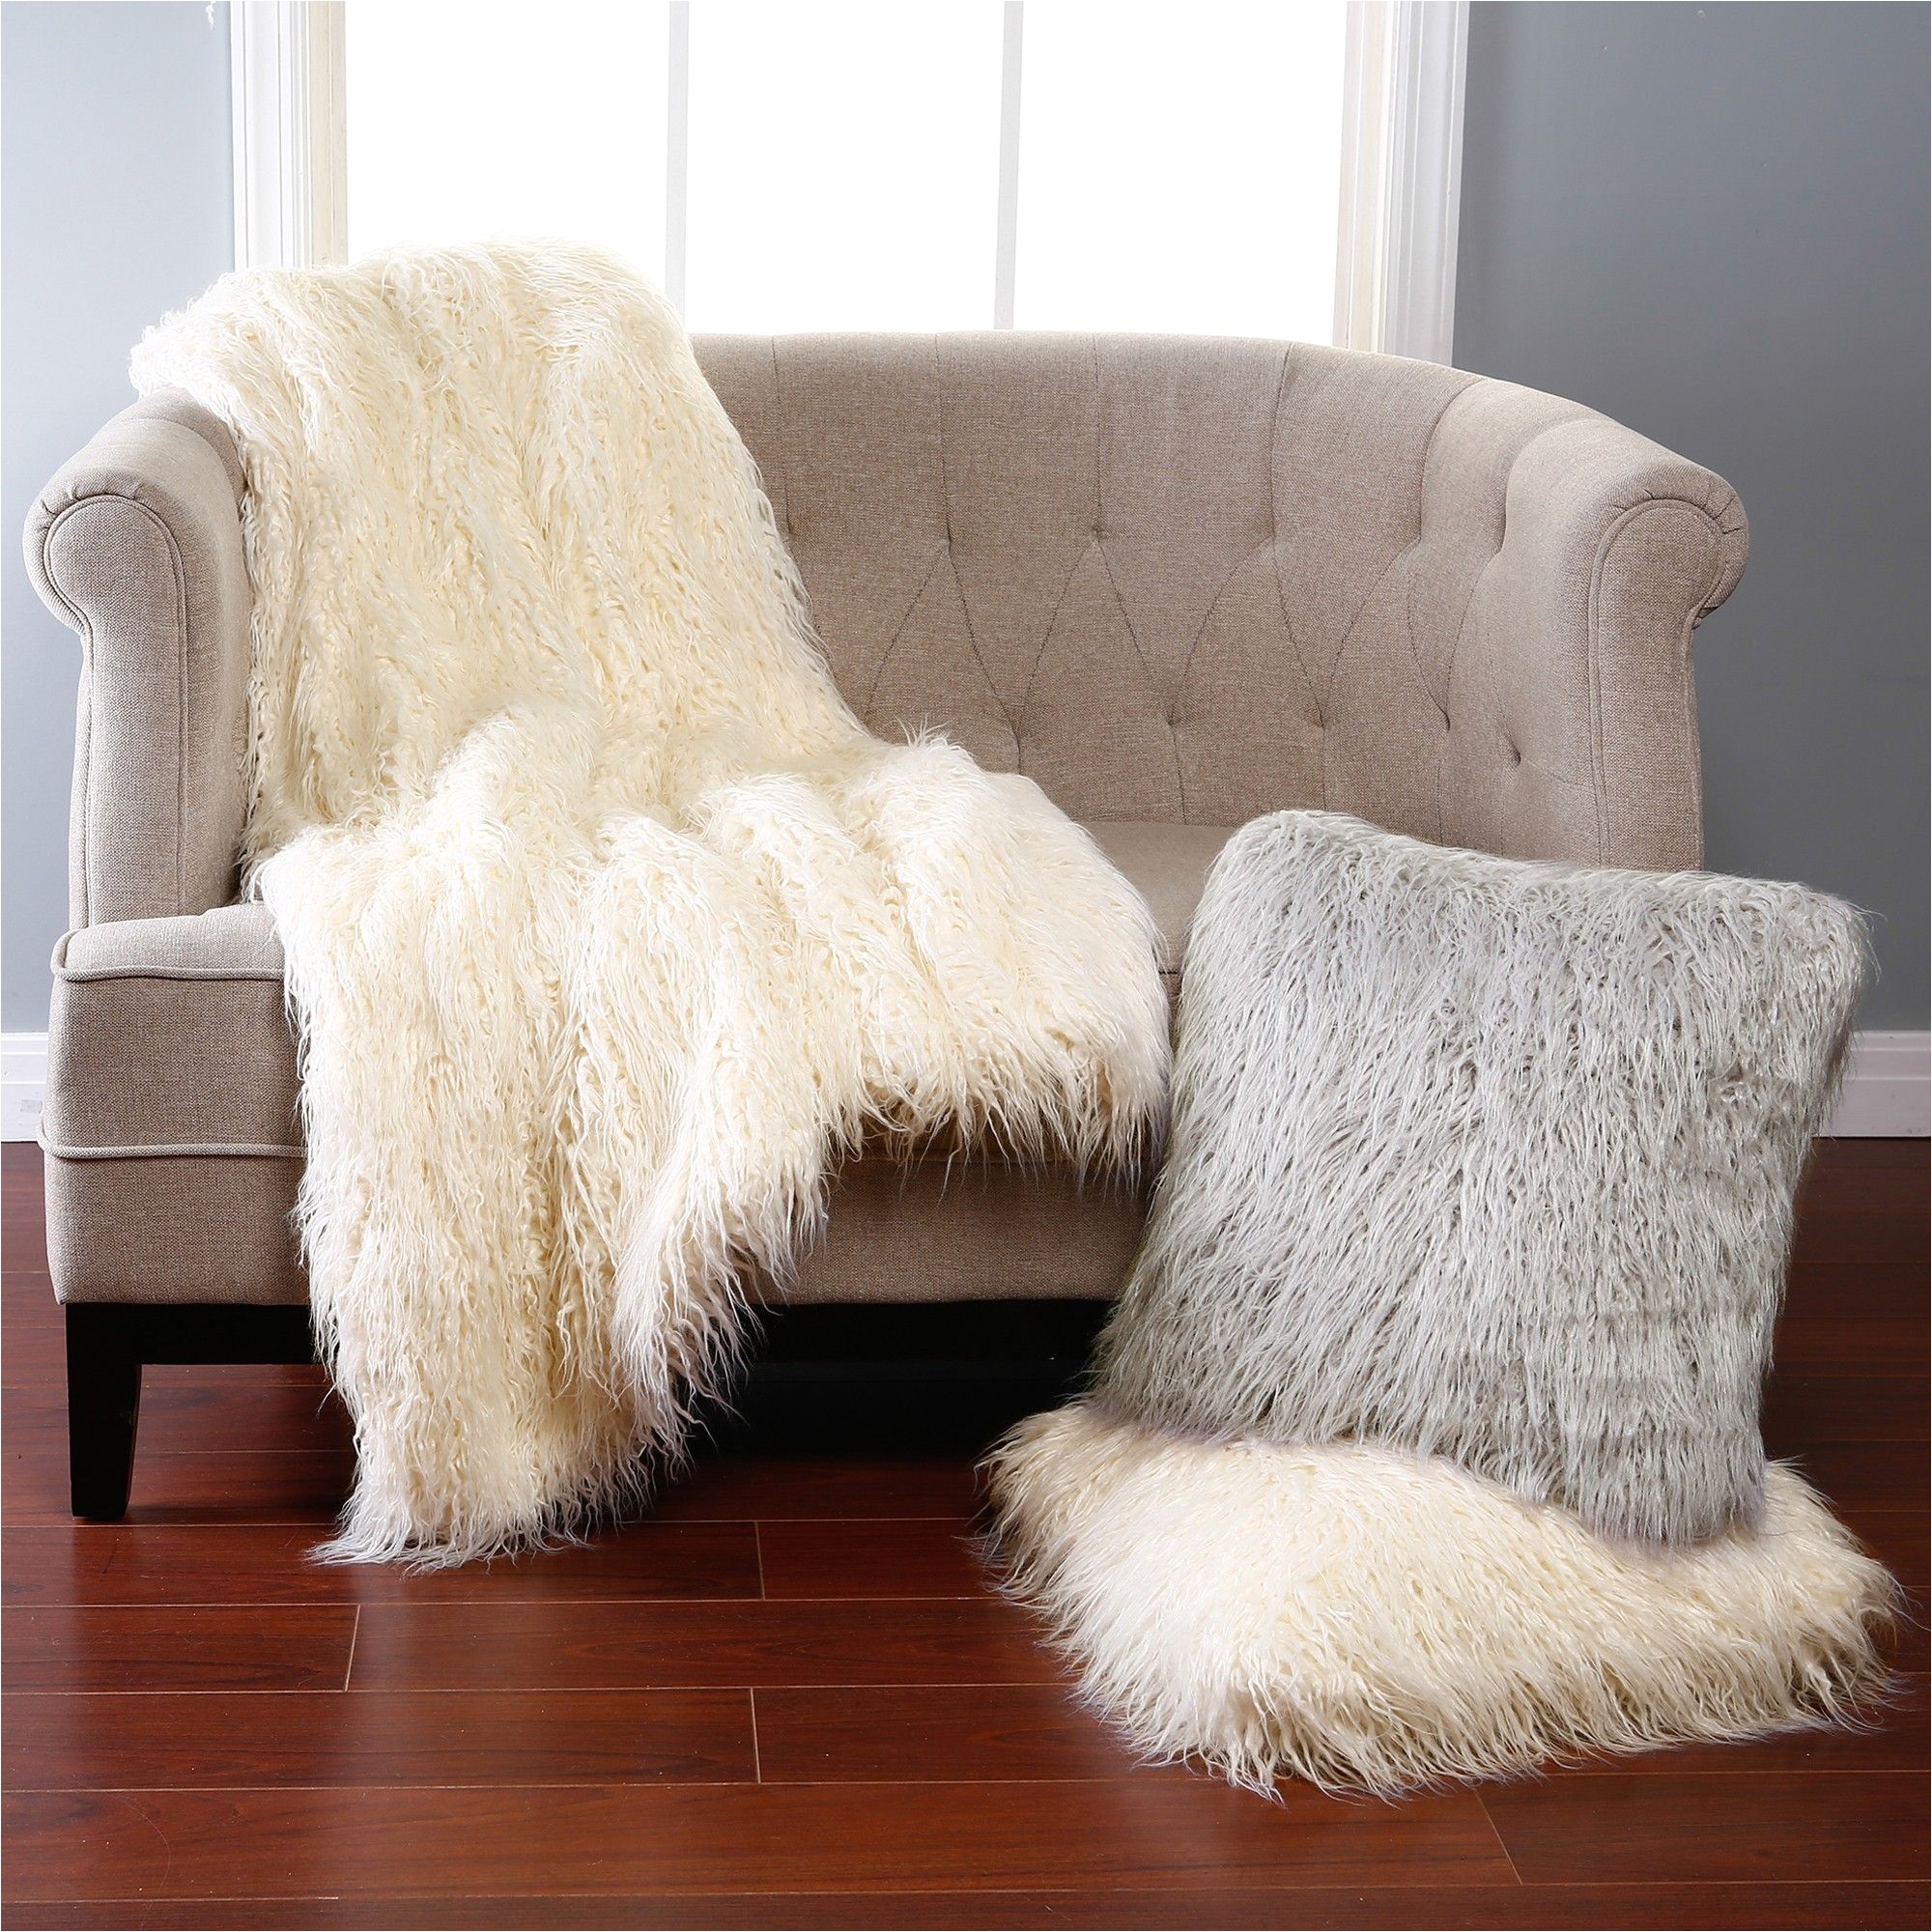 comfy faux sheepskin rug for floor decor ideas faux sheepskin rug sheepskin white rug sheep rug